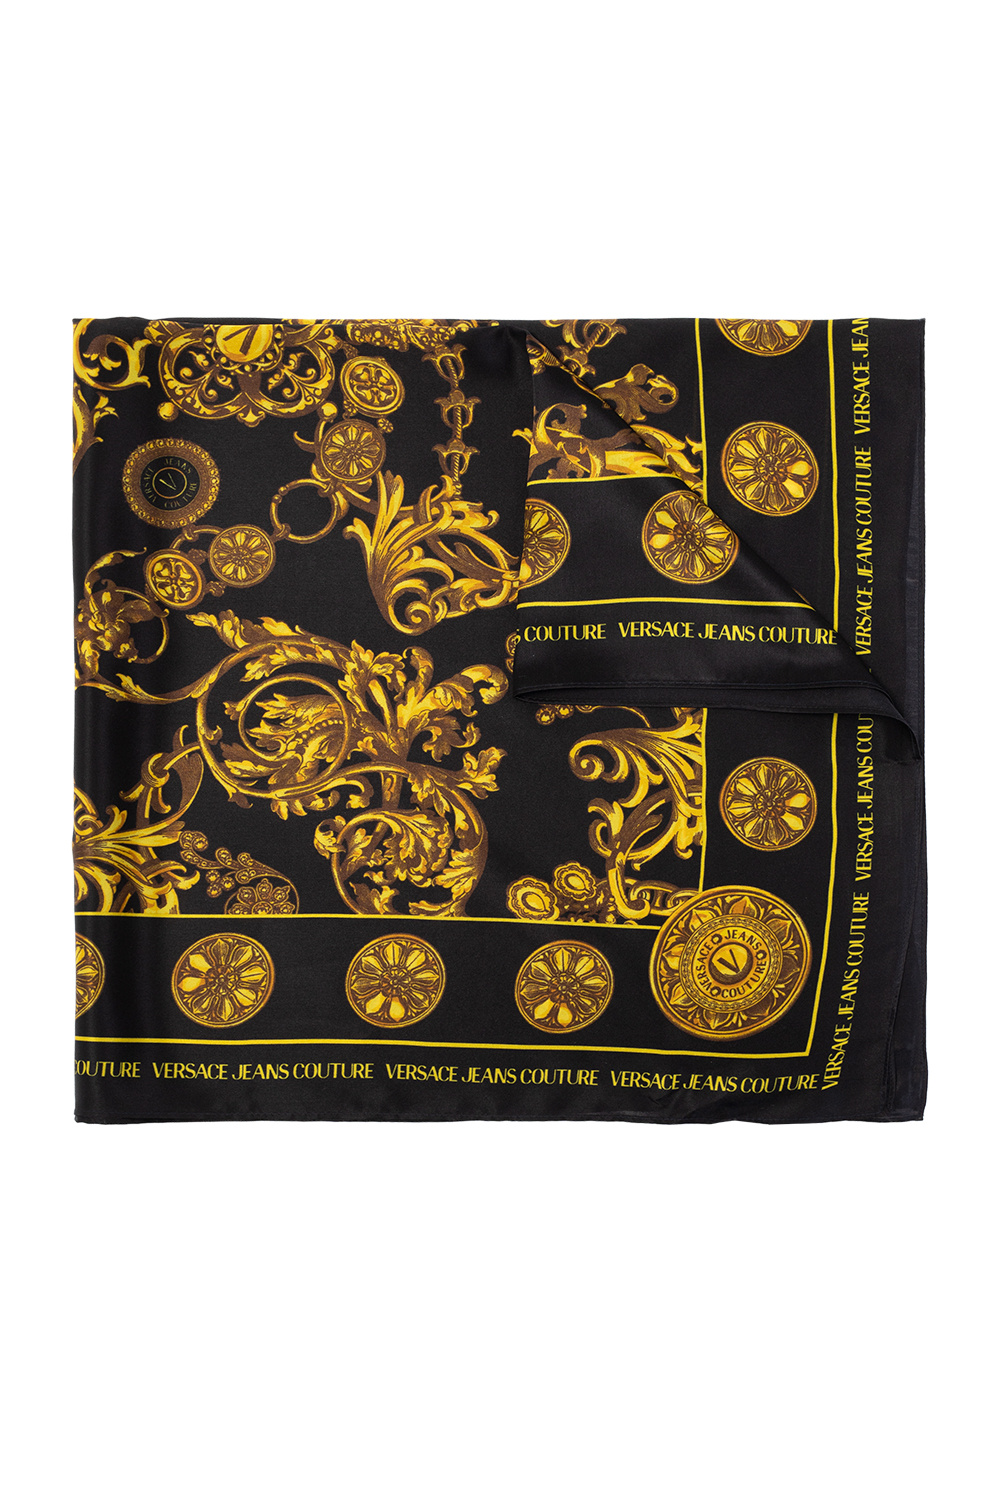 Baroque Print Trunk // Black + Gold (M) - Papi Underwear - Touch